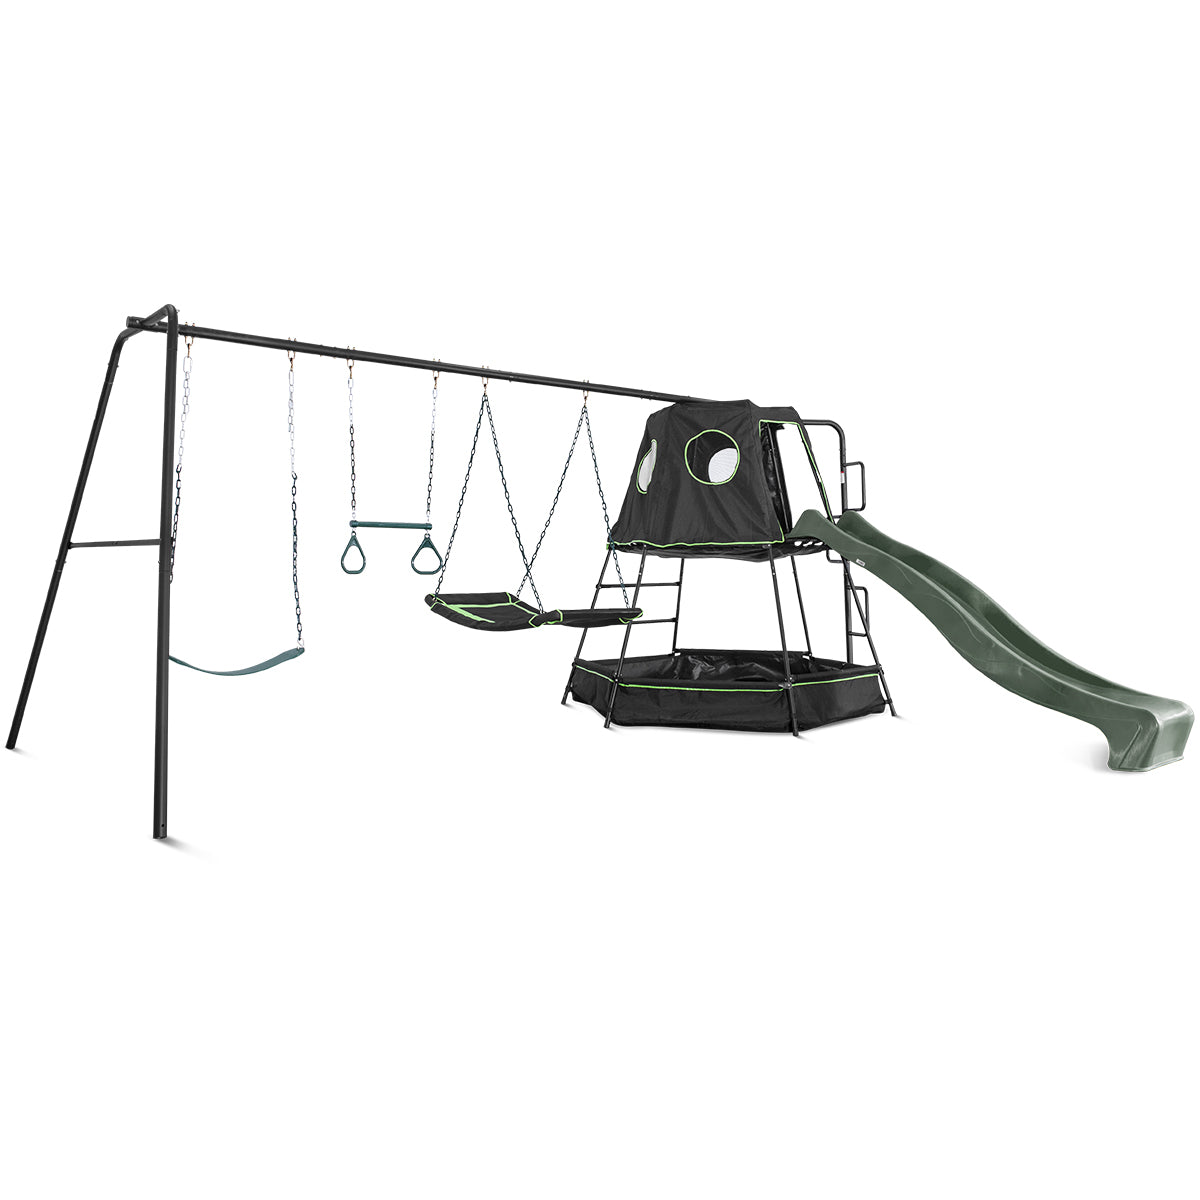 Lifespan Kids Pallas Play Tower with Metal Swing Set in Green Slide